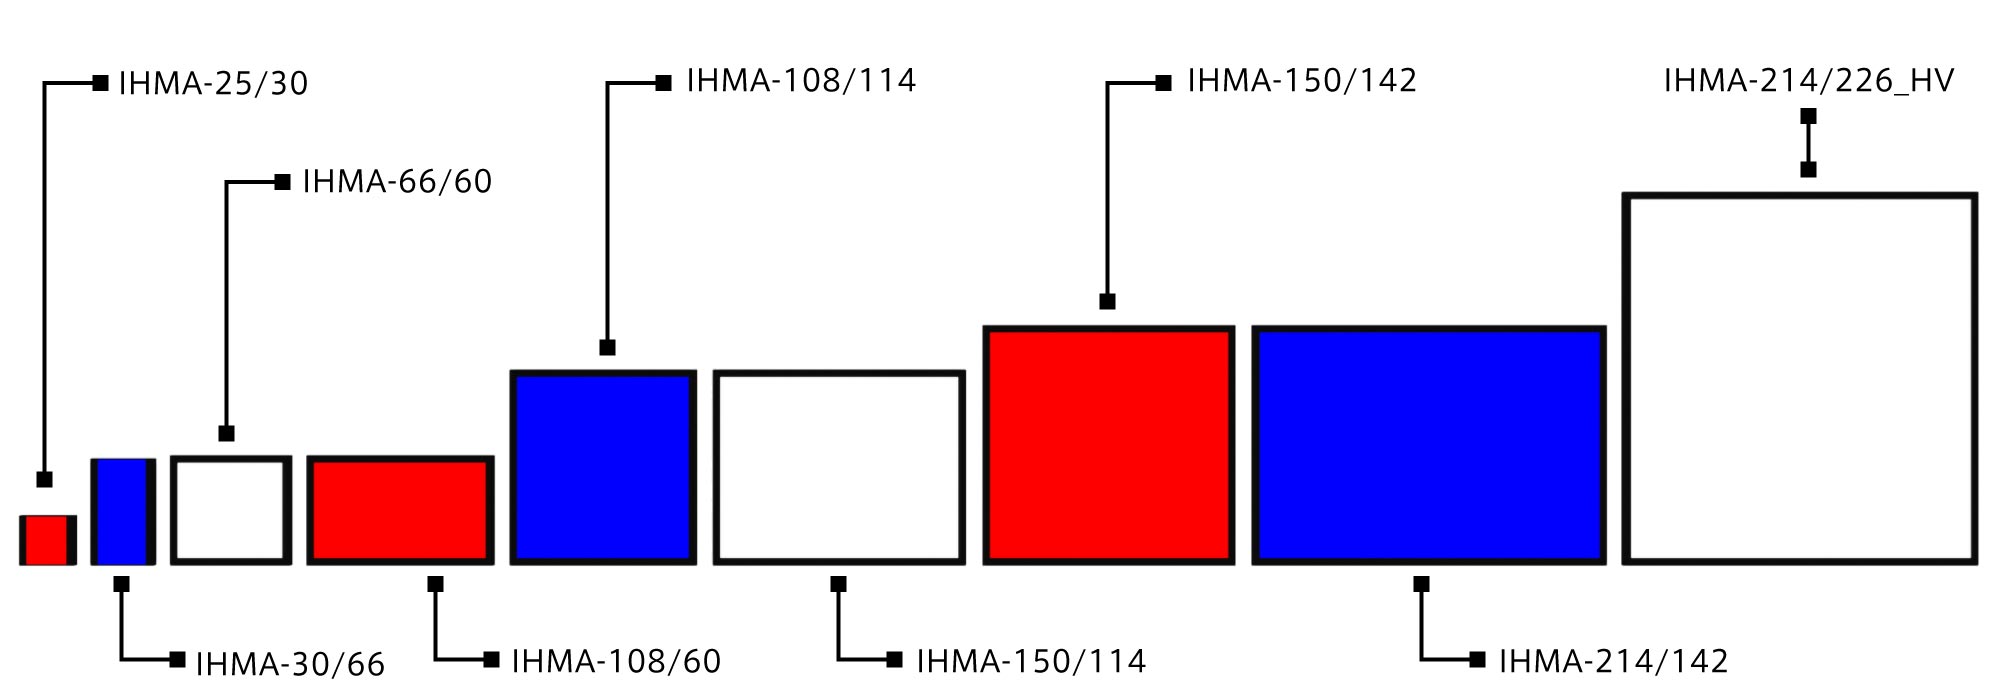 IHMA series